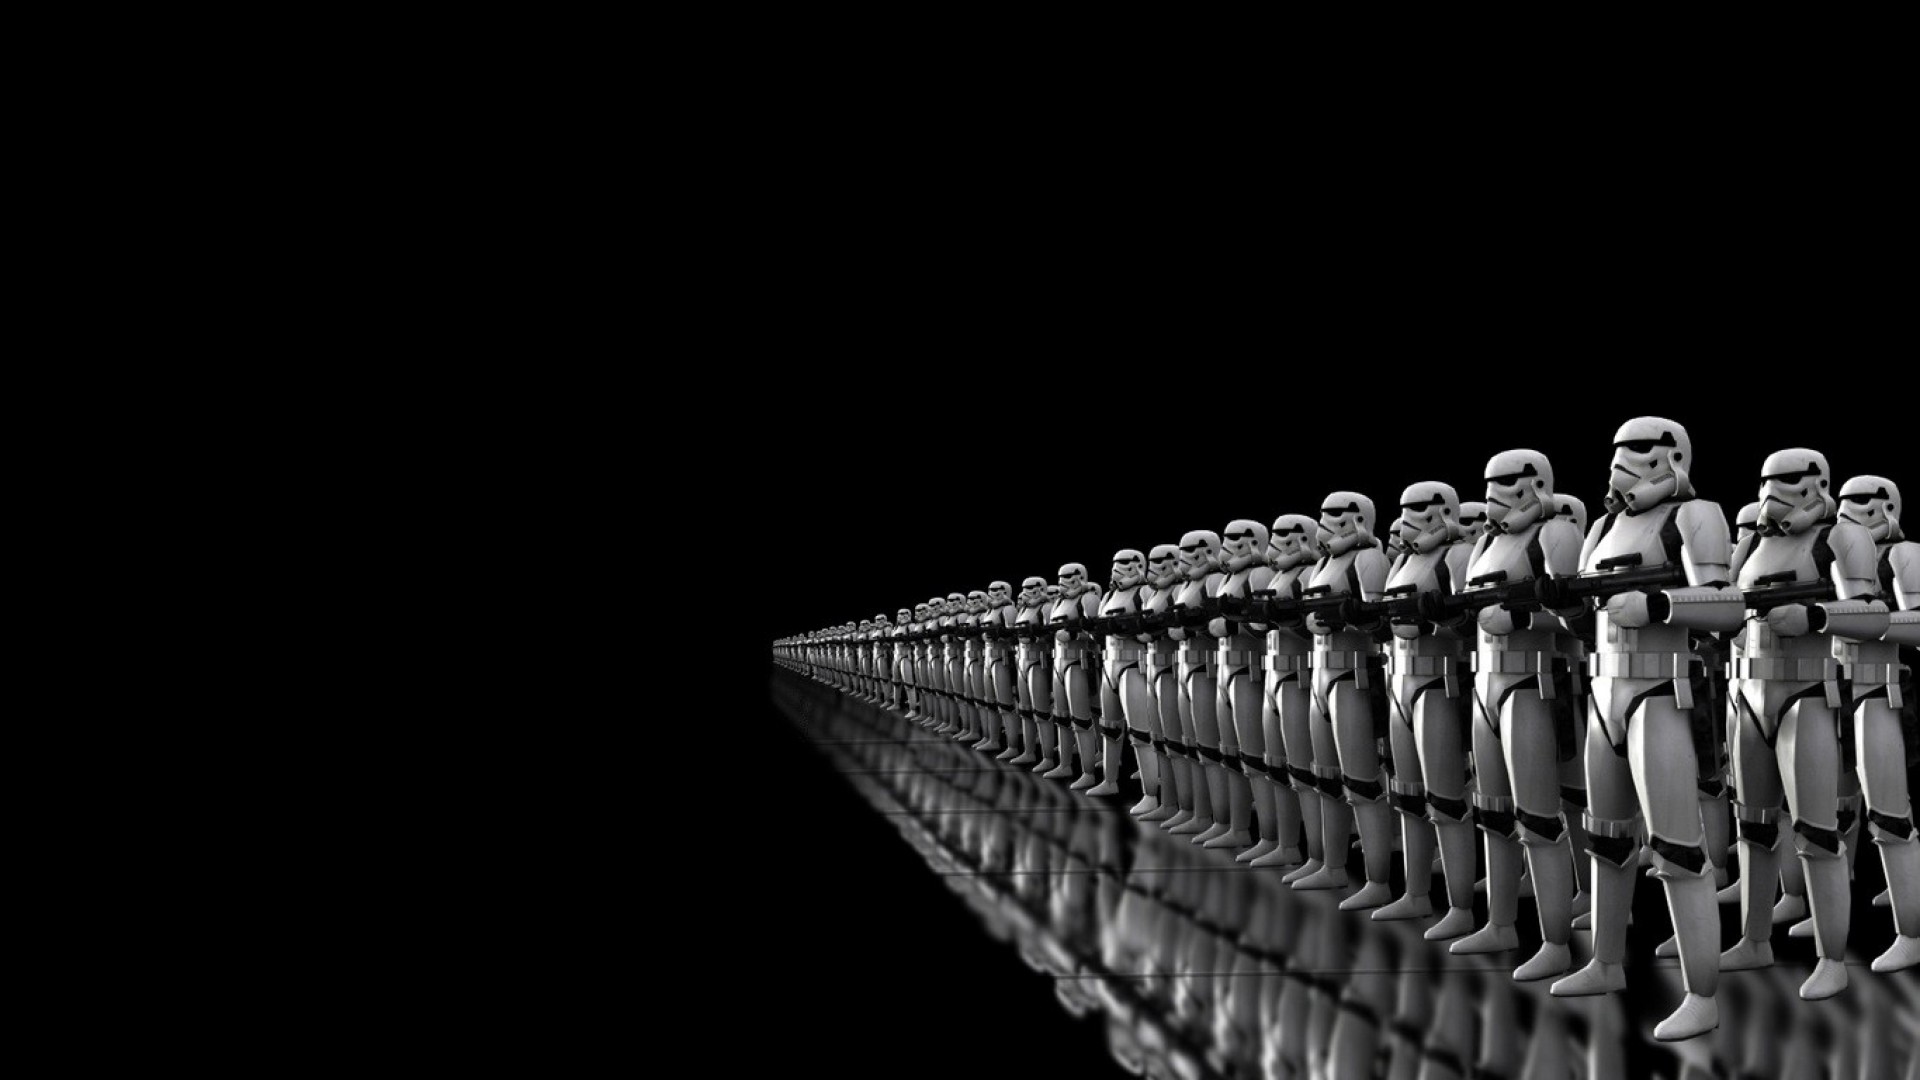 Wars Legion Stormtroopers Galactic Empire Wallpaper MixHD